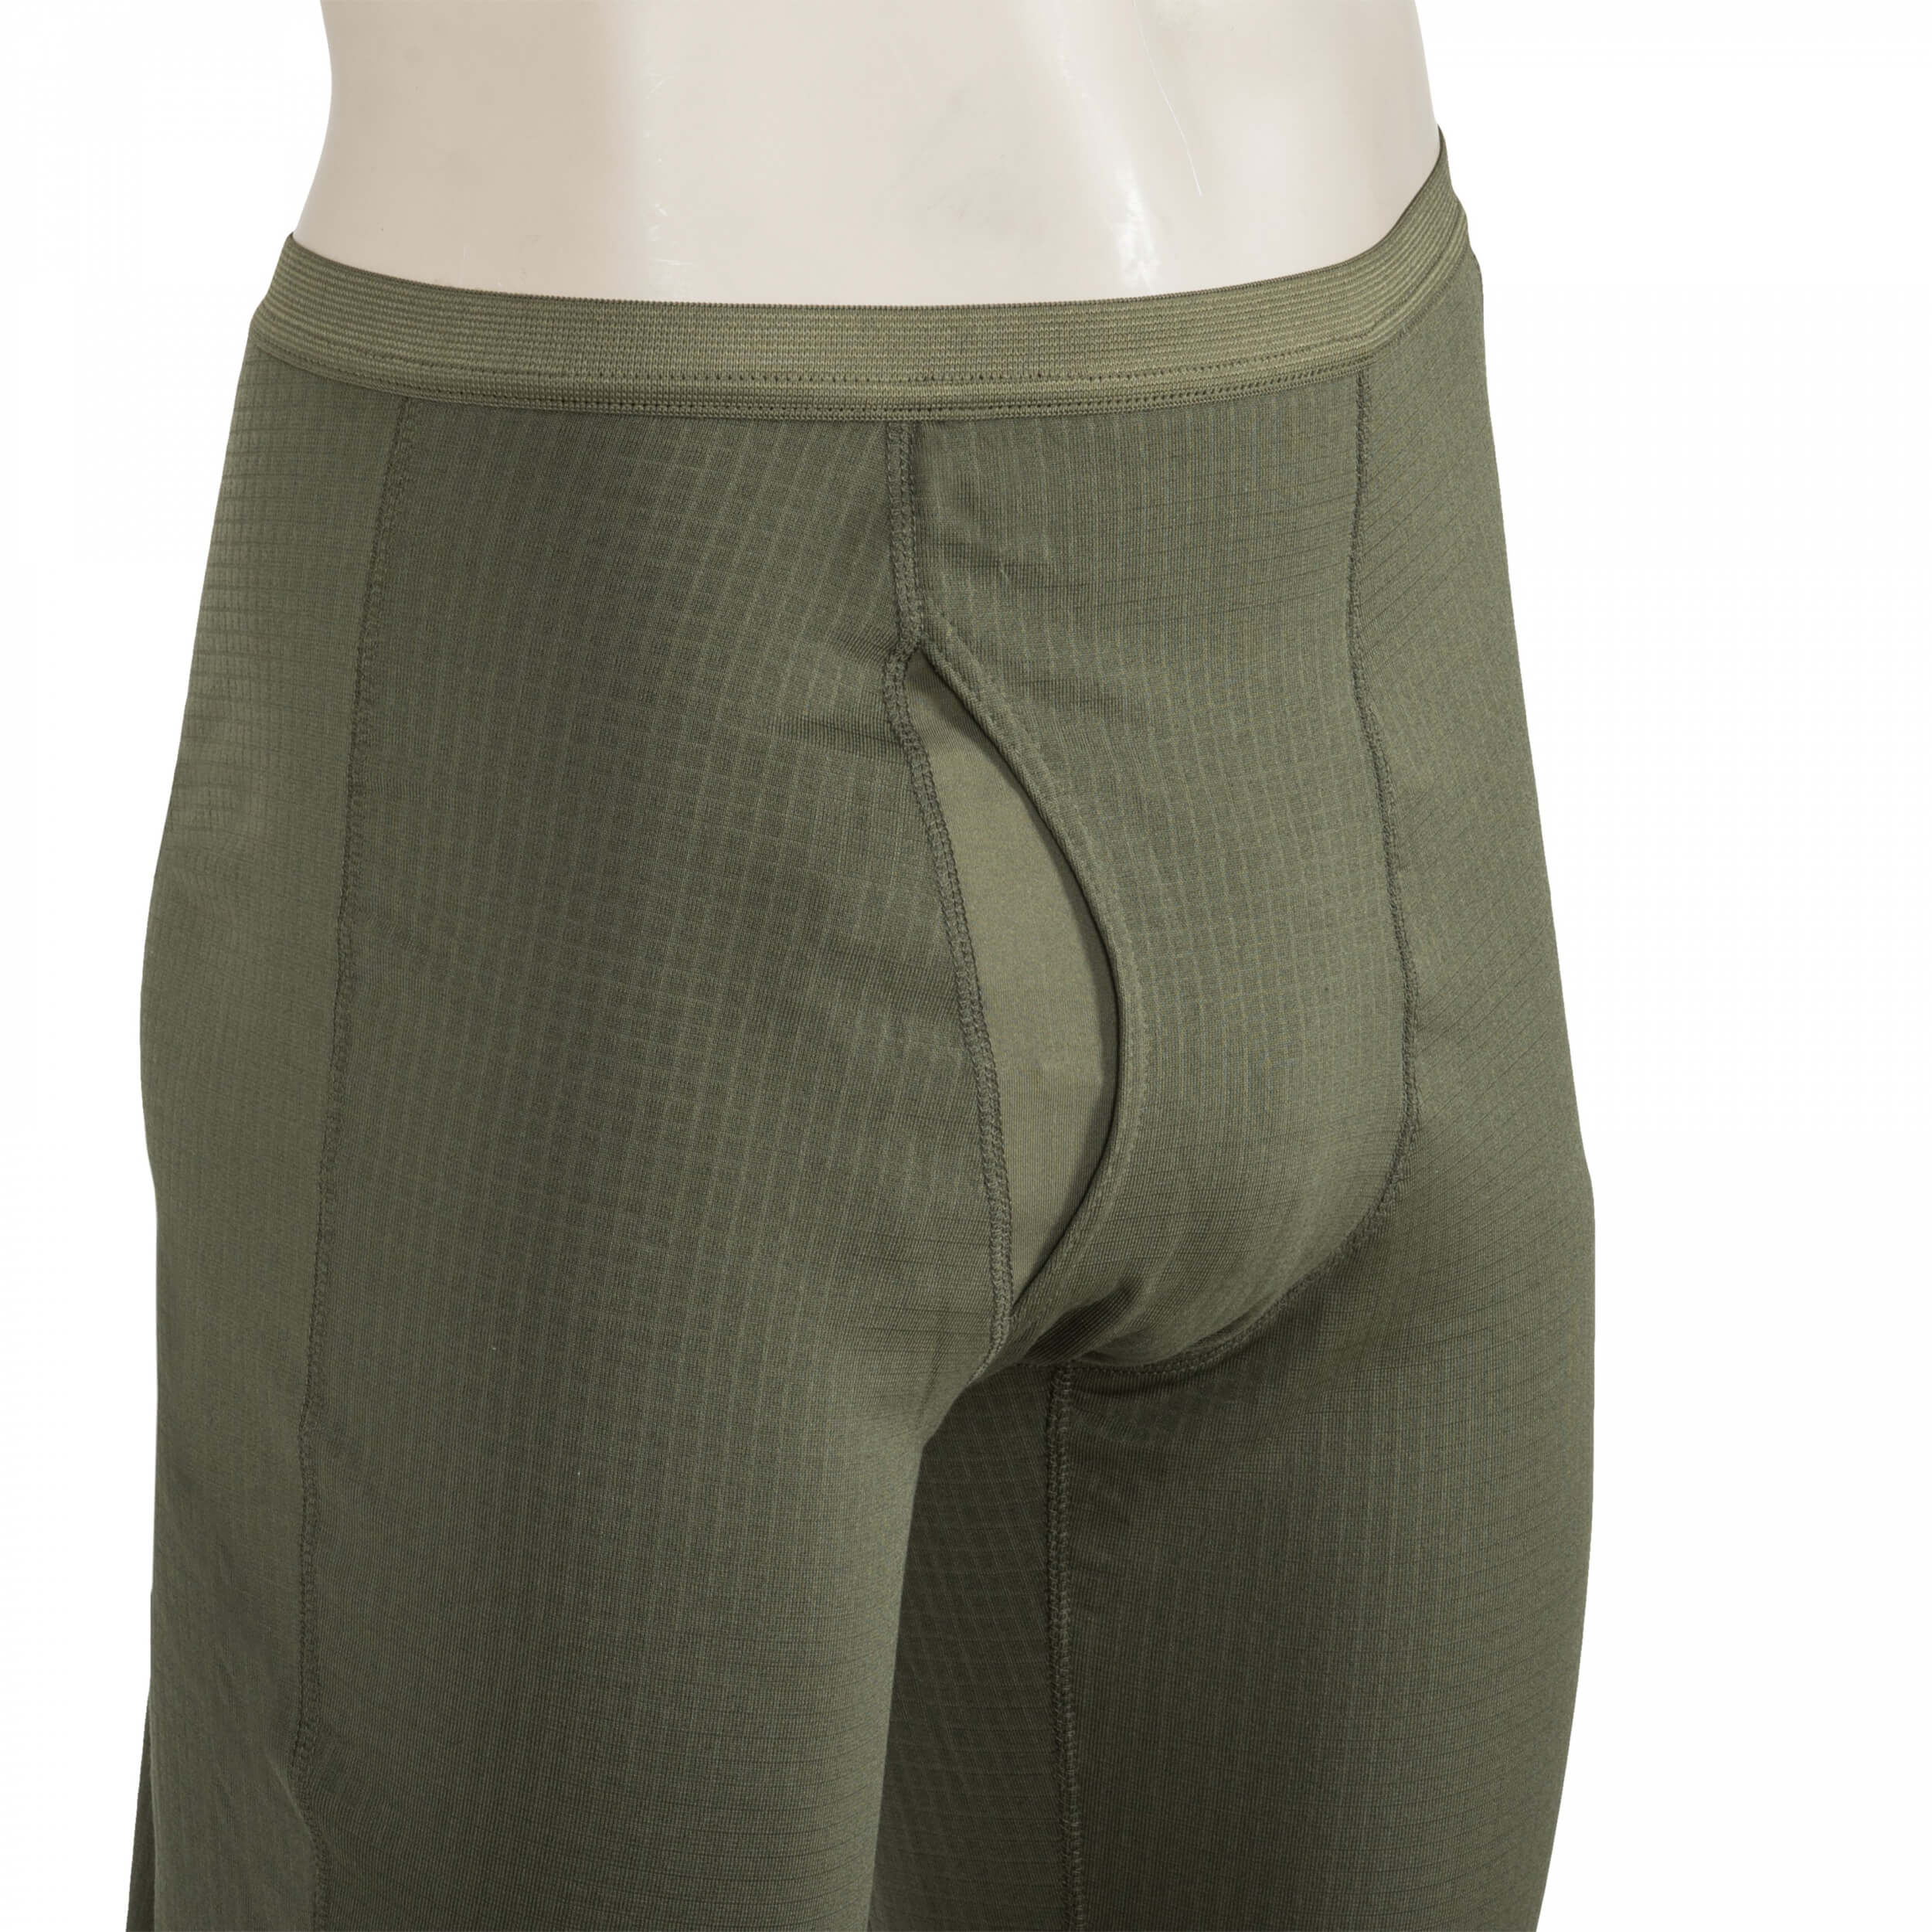 Helikon-Tex Underwear (full set) US LVL 2 Olive Green